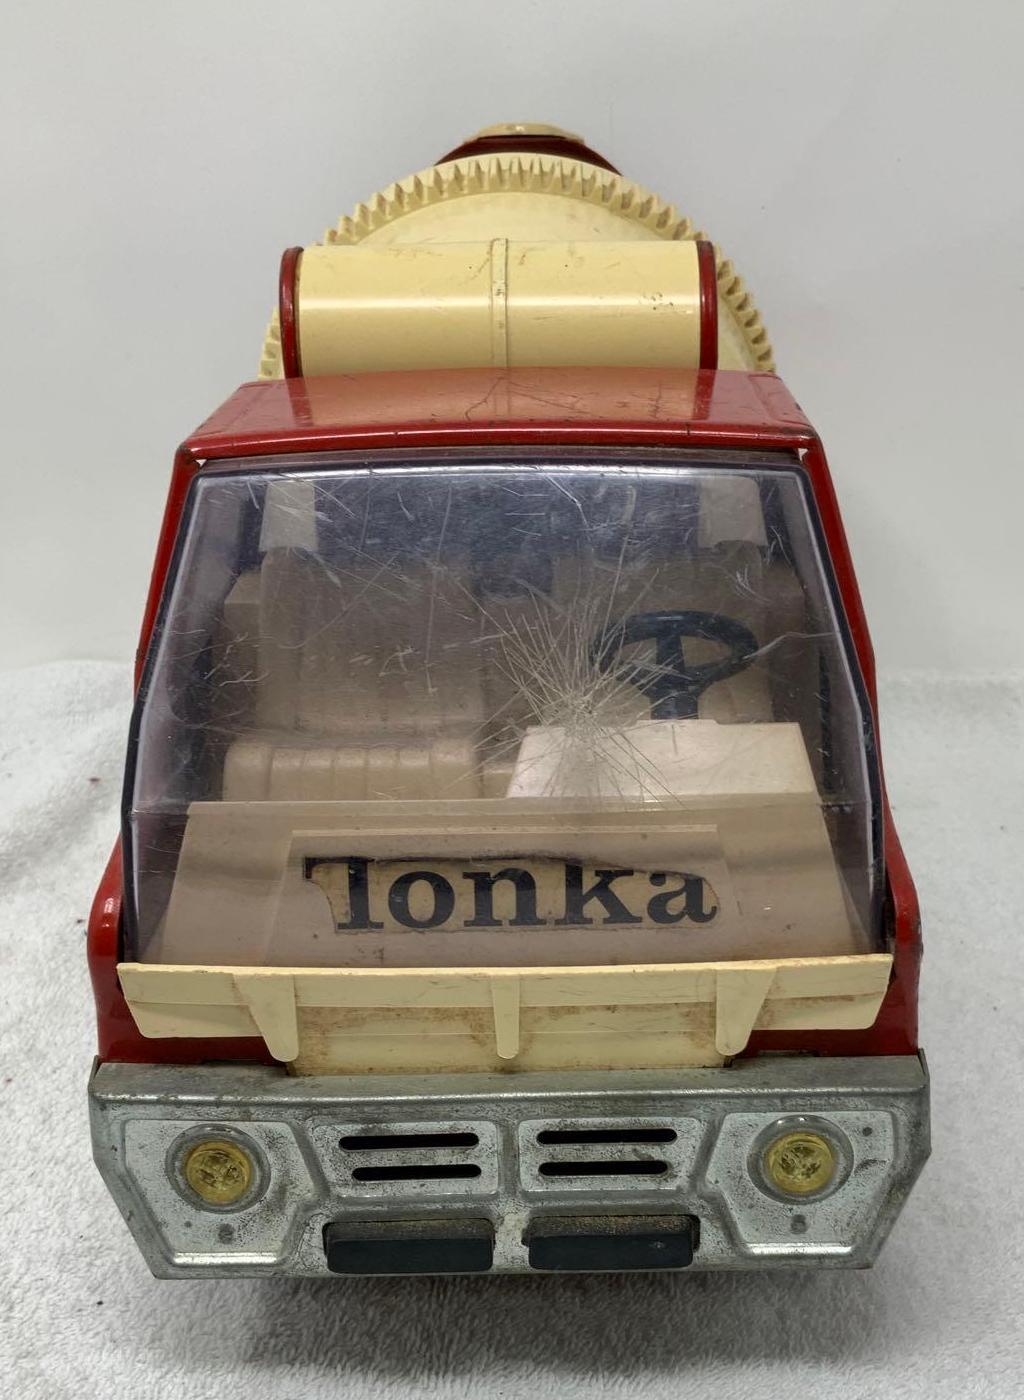 Vintage Tonka pressed steel red cement truck